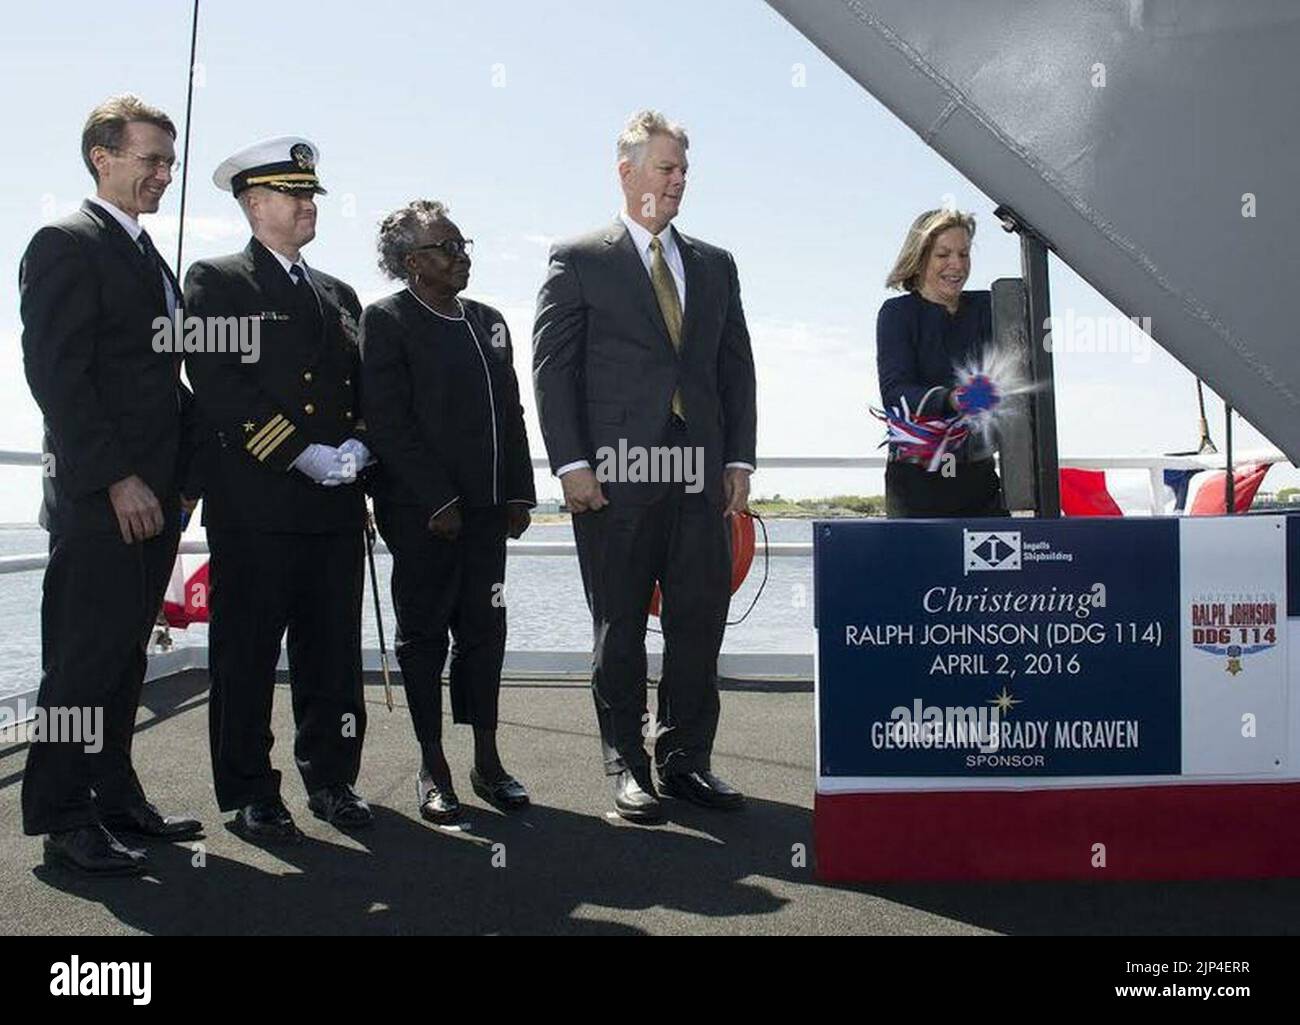 The future USS Ralph Johnson (DDG 114) is christened. (25628605164) Stock Photo